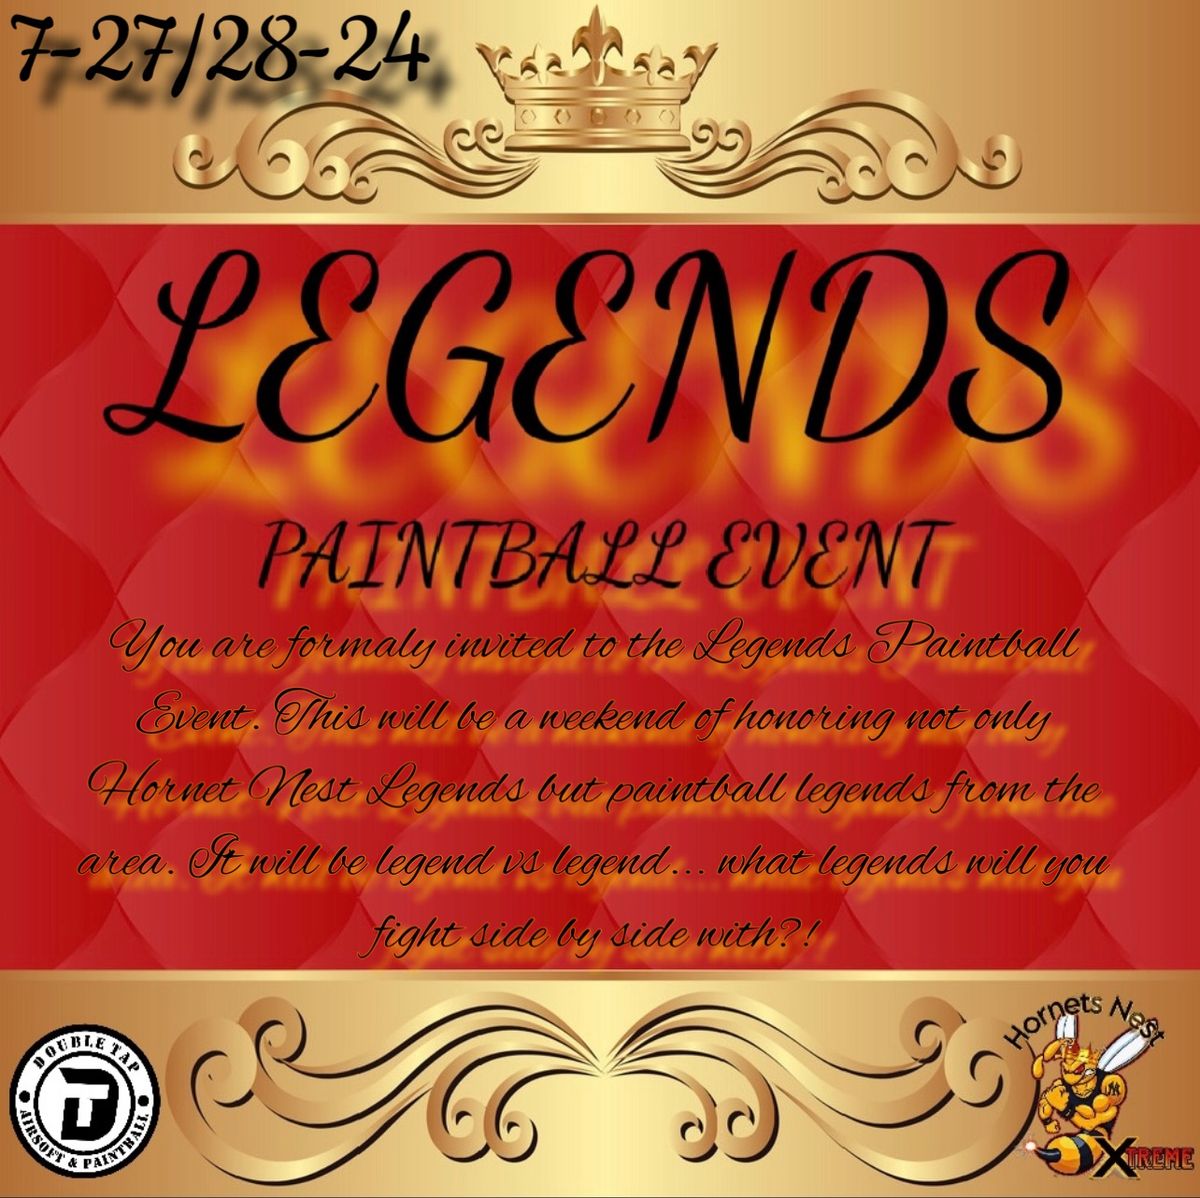 Legends Paintball Event